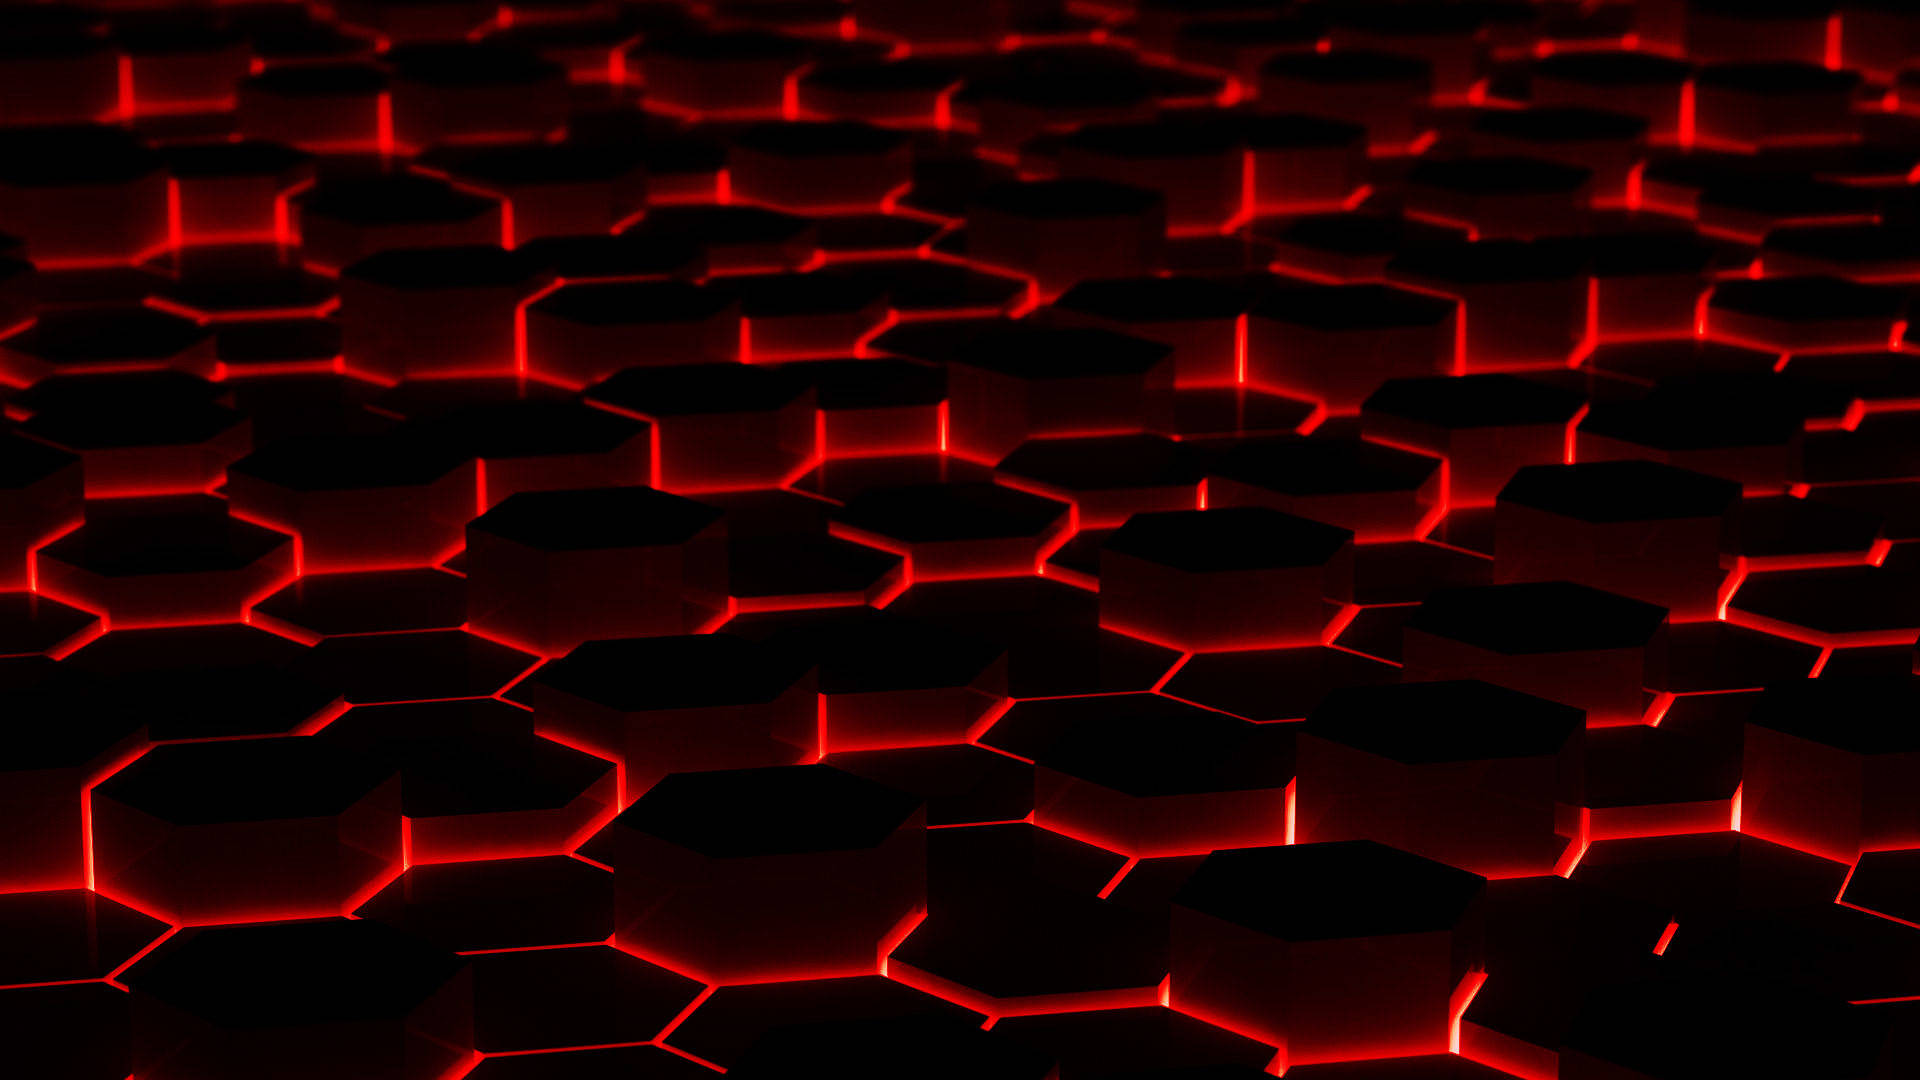 Red Backlight And Hexagons In Black Desktop Wallpaper